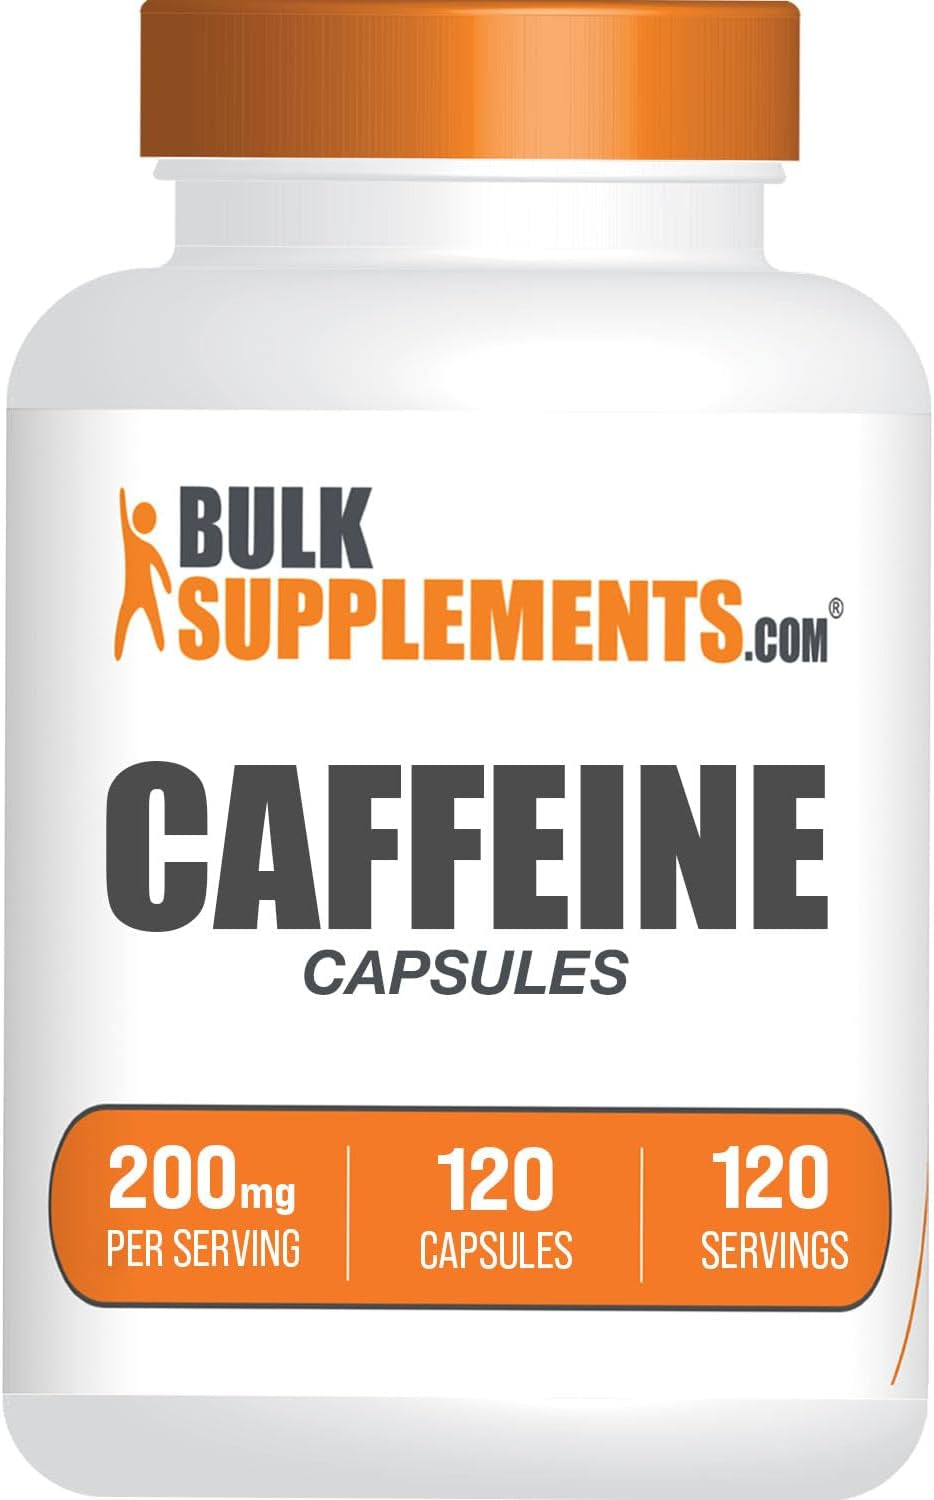 Bulksupplements.Com Caffeine Capsules - Caffeine Supplements, Caffeine Pills 200Mg - Caffeine Capsule, Stay Awake Caffeine Pills - 1 Capsule per Servings, 120-Day Supply, 120 Capsules